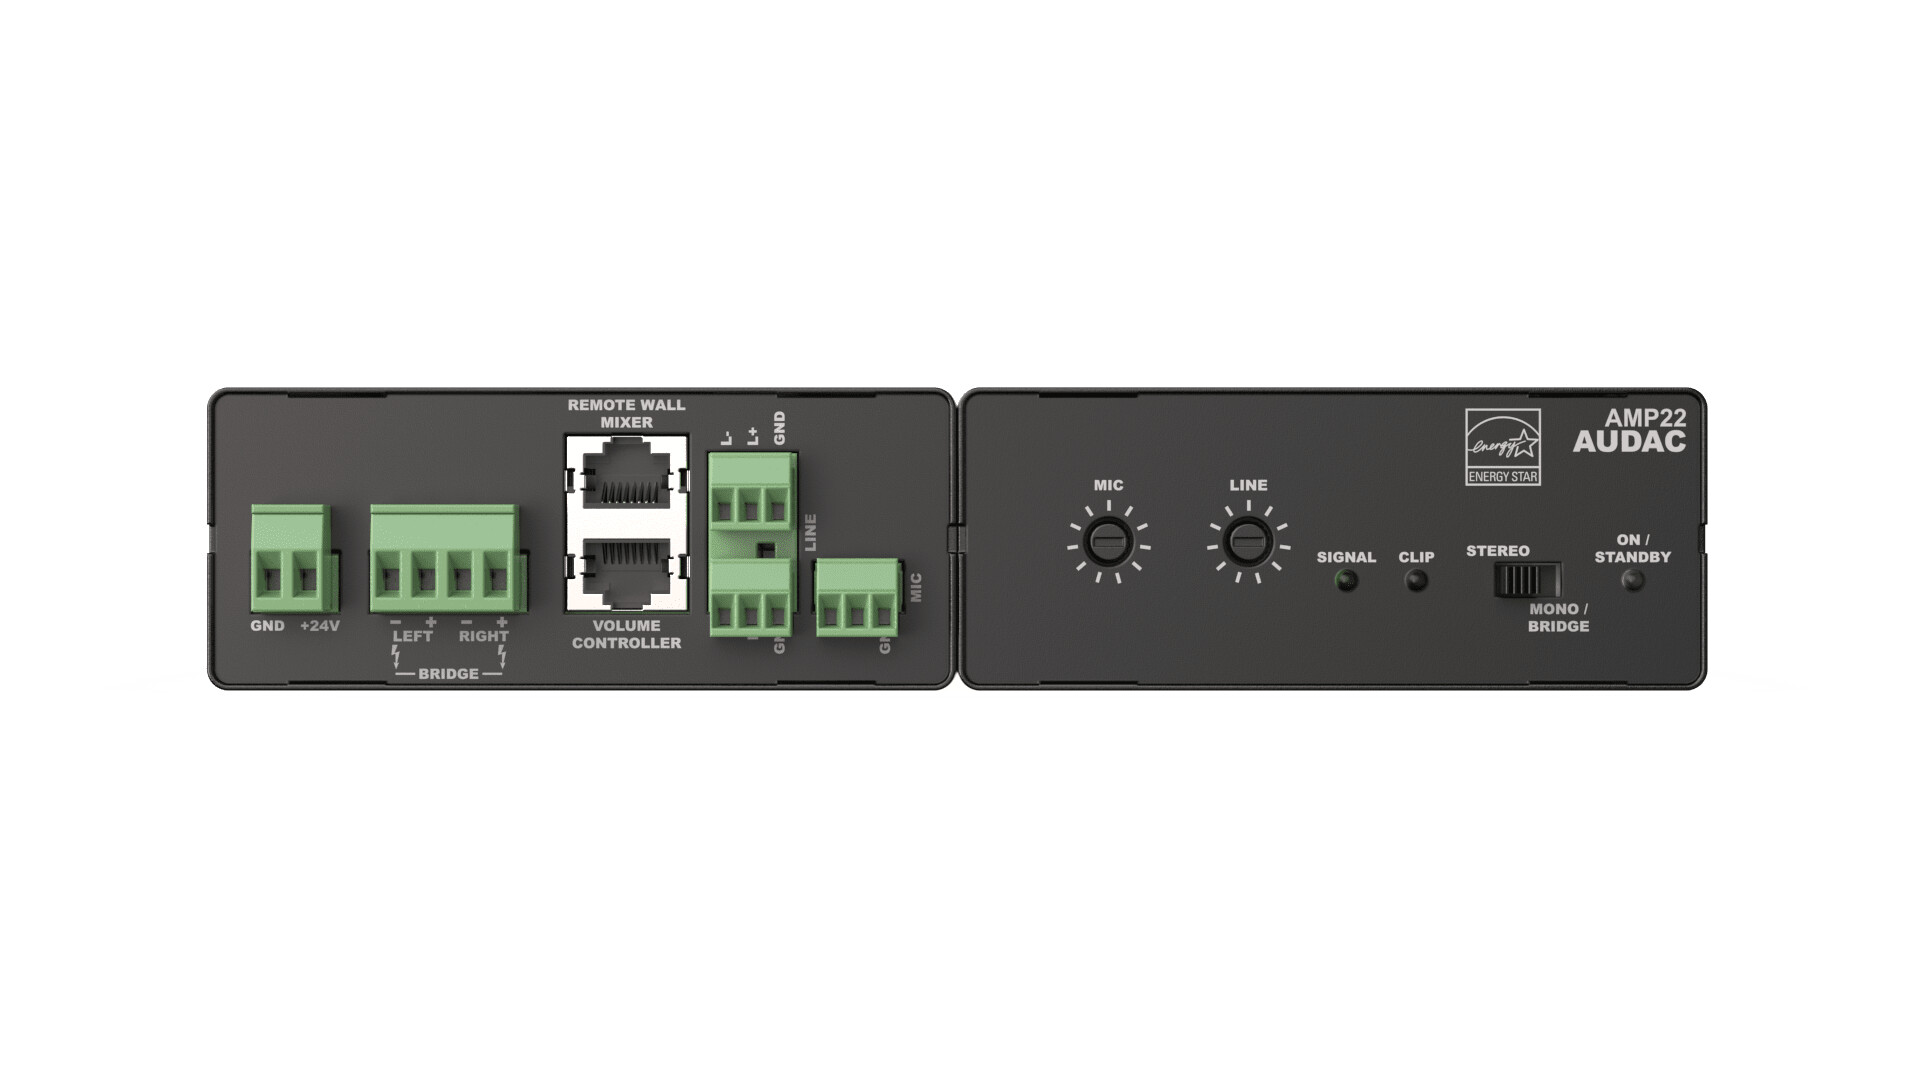 Audac-AMP22-Mini-Stereoverstarker-2x15W-4Ohm-bruckbar-sym-Mikrofon-und-Line-Eingange-WP2xx-Eingang-RJ45-S-Box